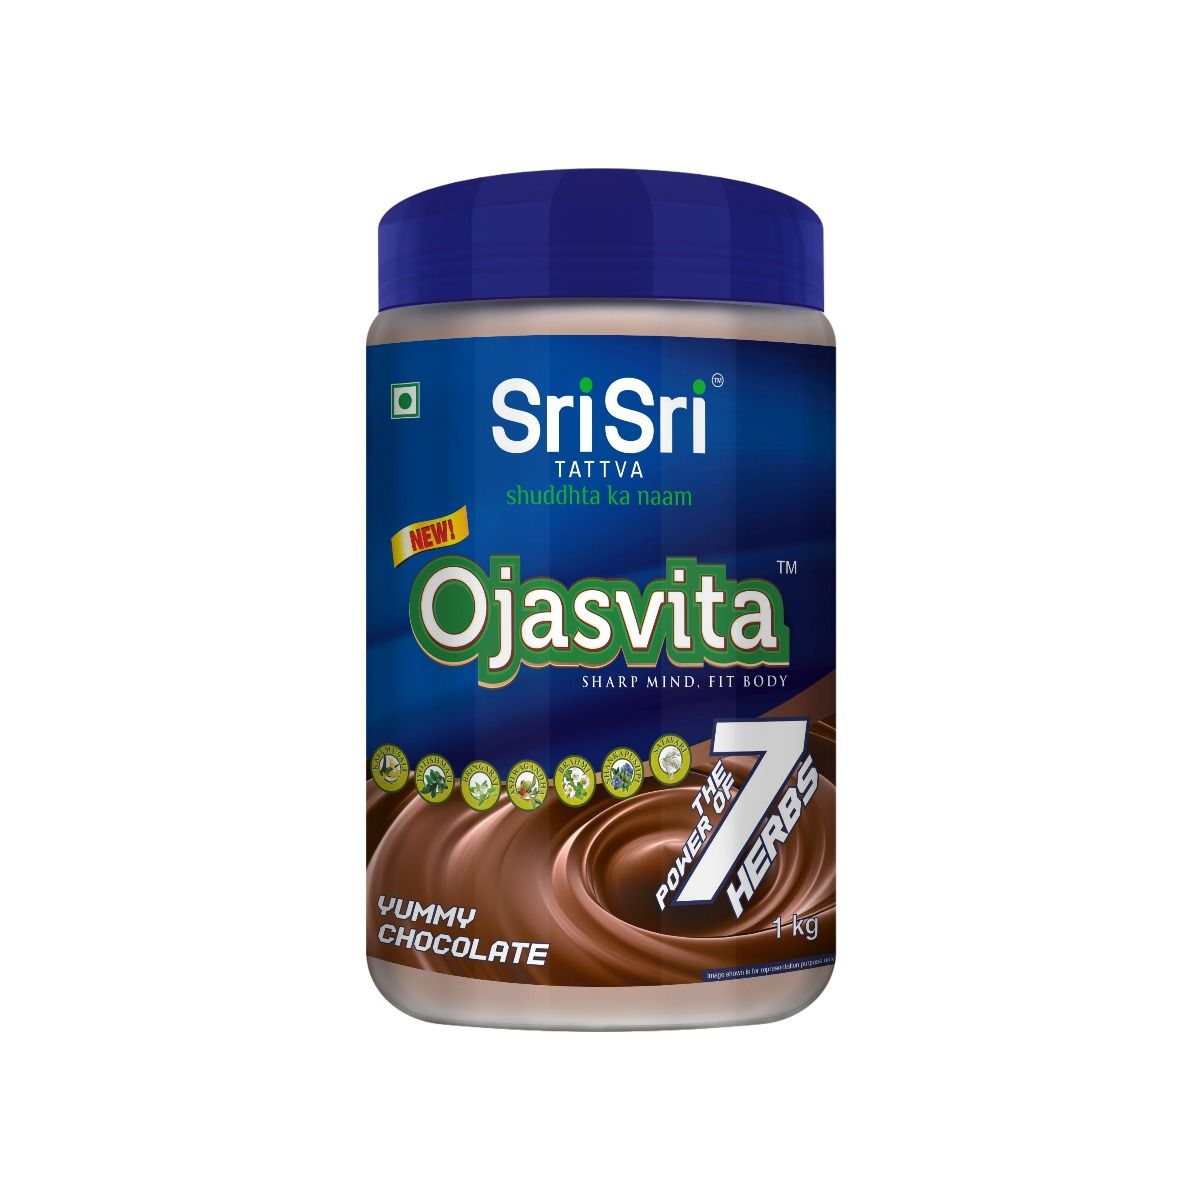 Sri Sri Tattva Ojasvita Chocolate Flavour, 1 kg, Pack of 1 